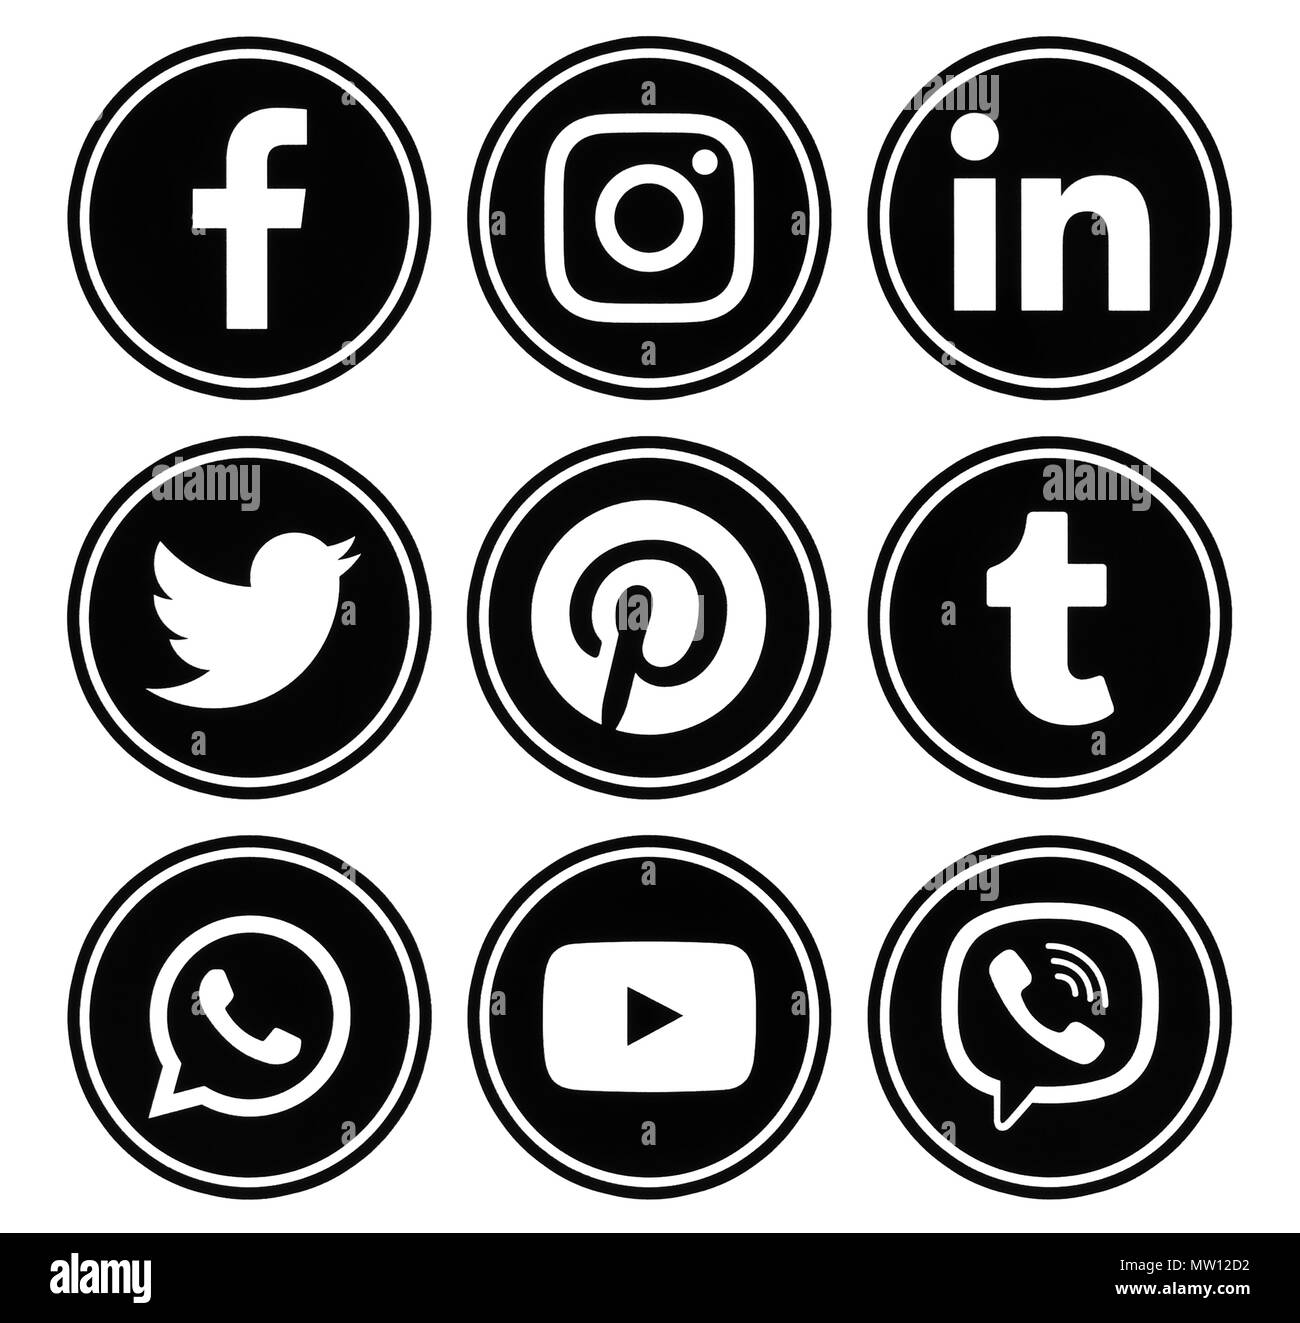 Kiev, Ucraina - 08 dicembre, 2017: cerchio popolare social media logo nero con bordo stampato su carta: Facebook, Twitter Instagram, Pinterest, LinkedI Foto Stock